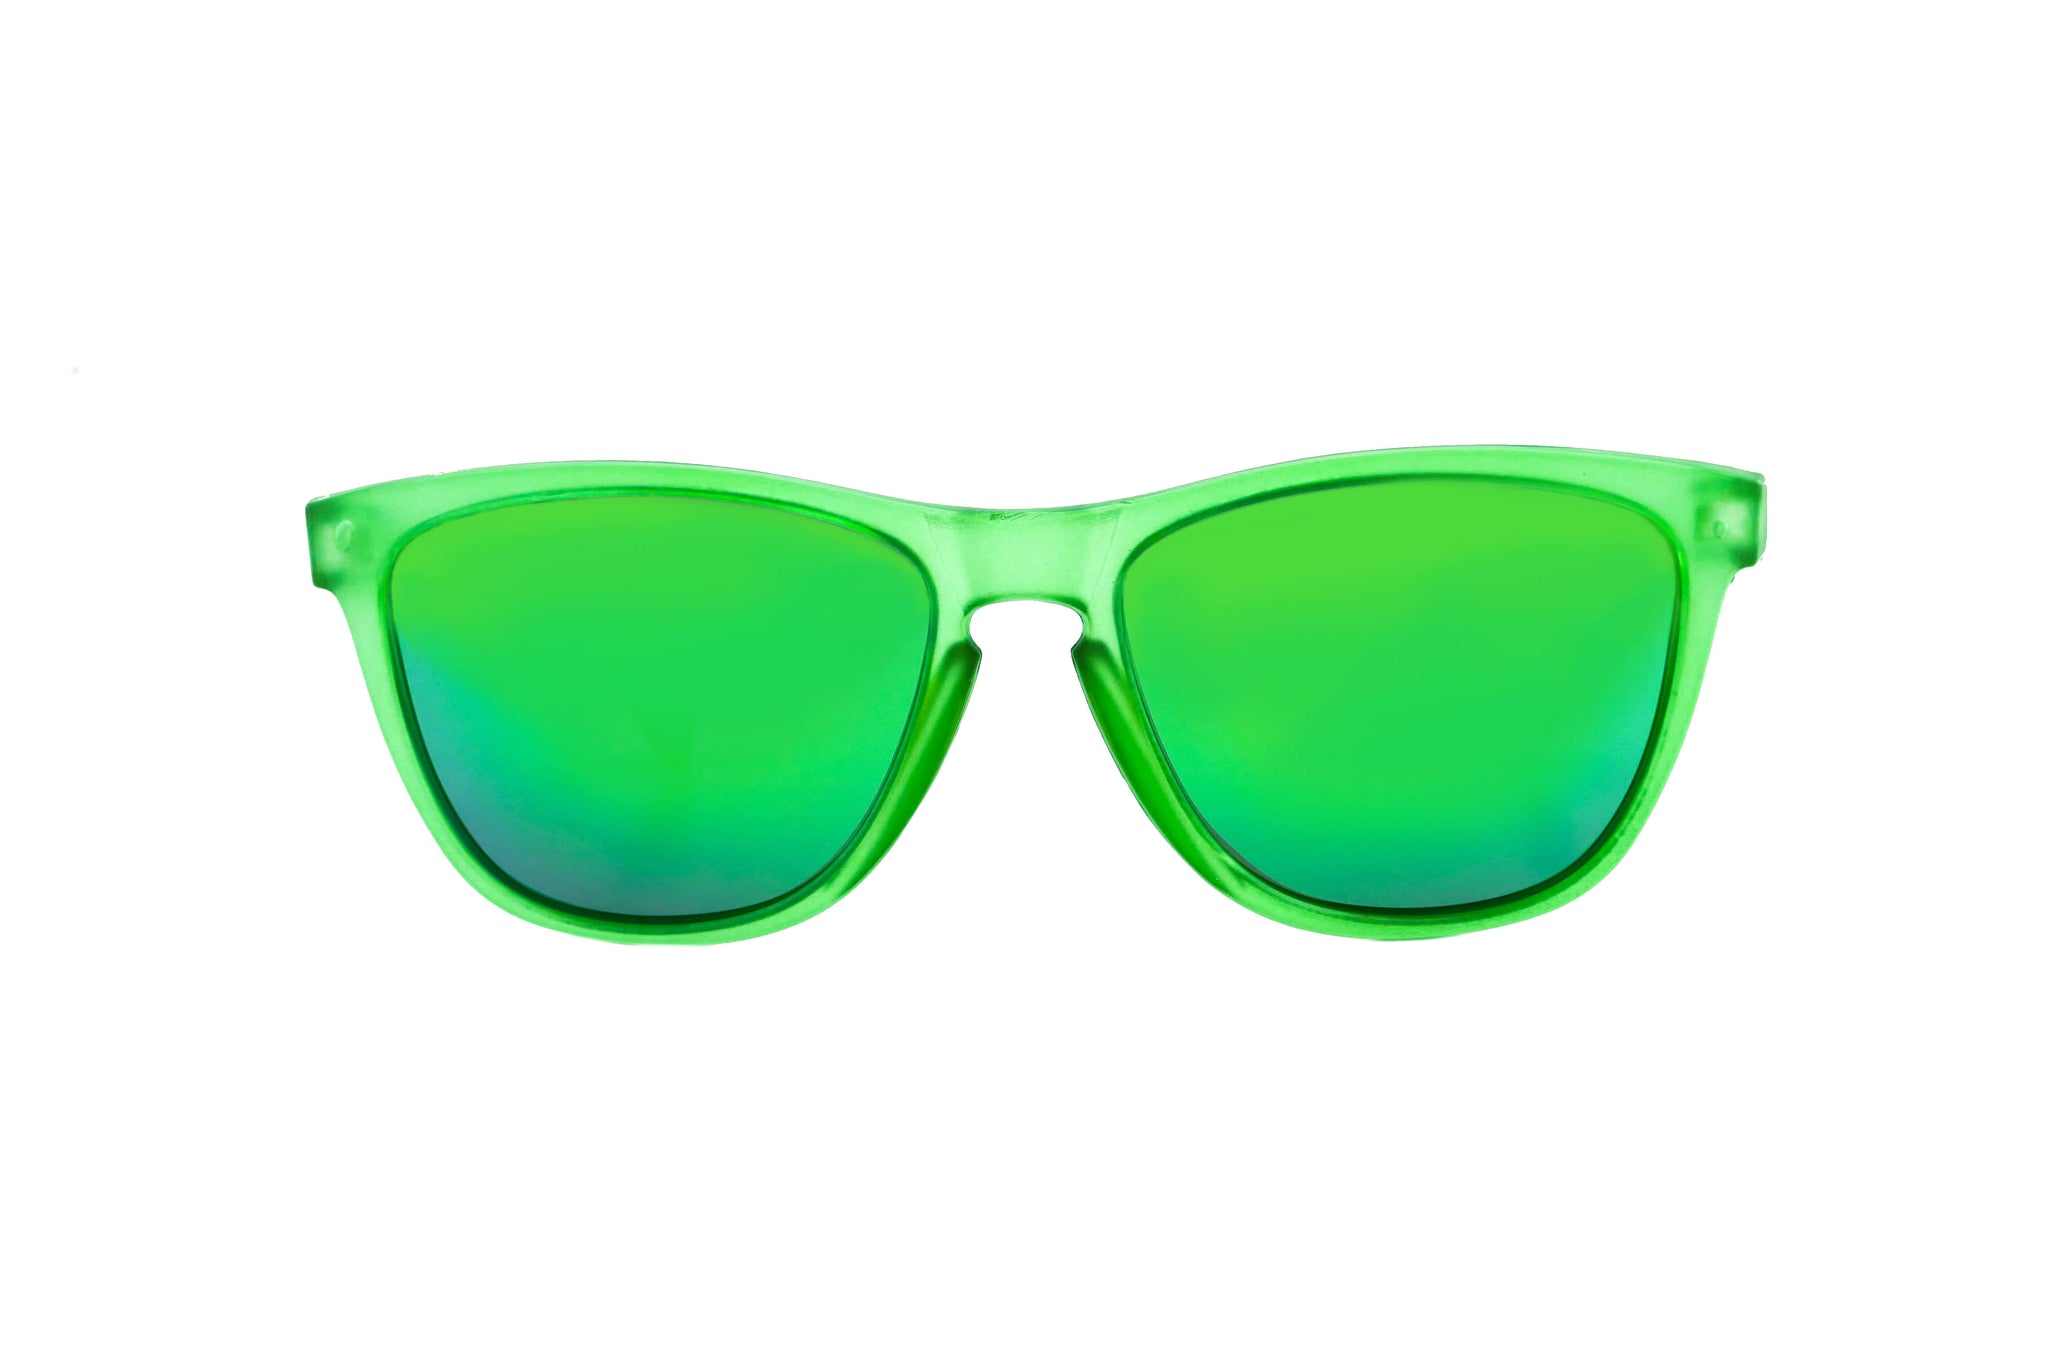 Green polarized running sunglasses for 